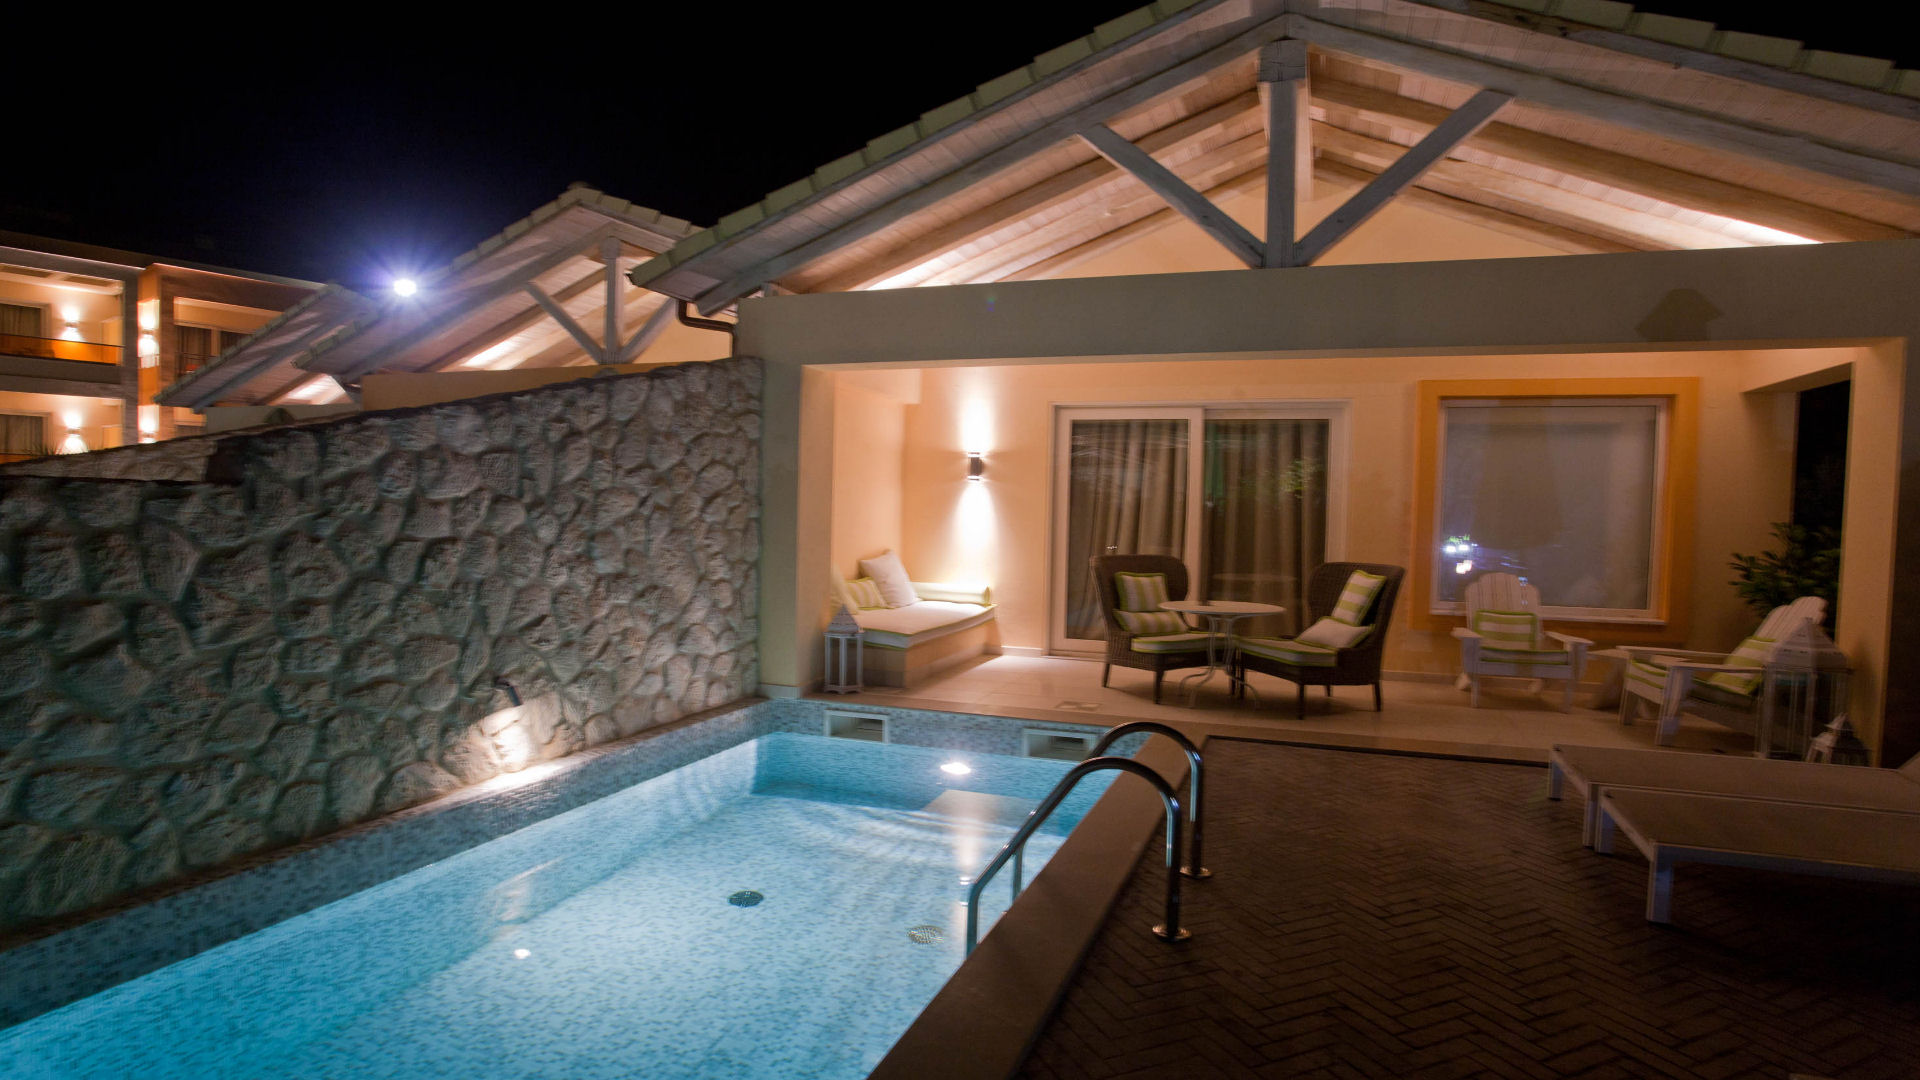 Hotel Litohoro Olympus Resort Villas _ Spa VIP Villa with Jacuzzi Hot Tub and Private Pool.jpg